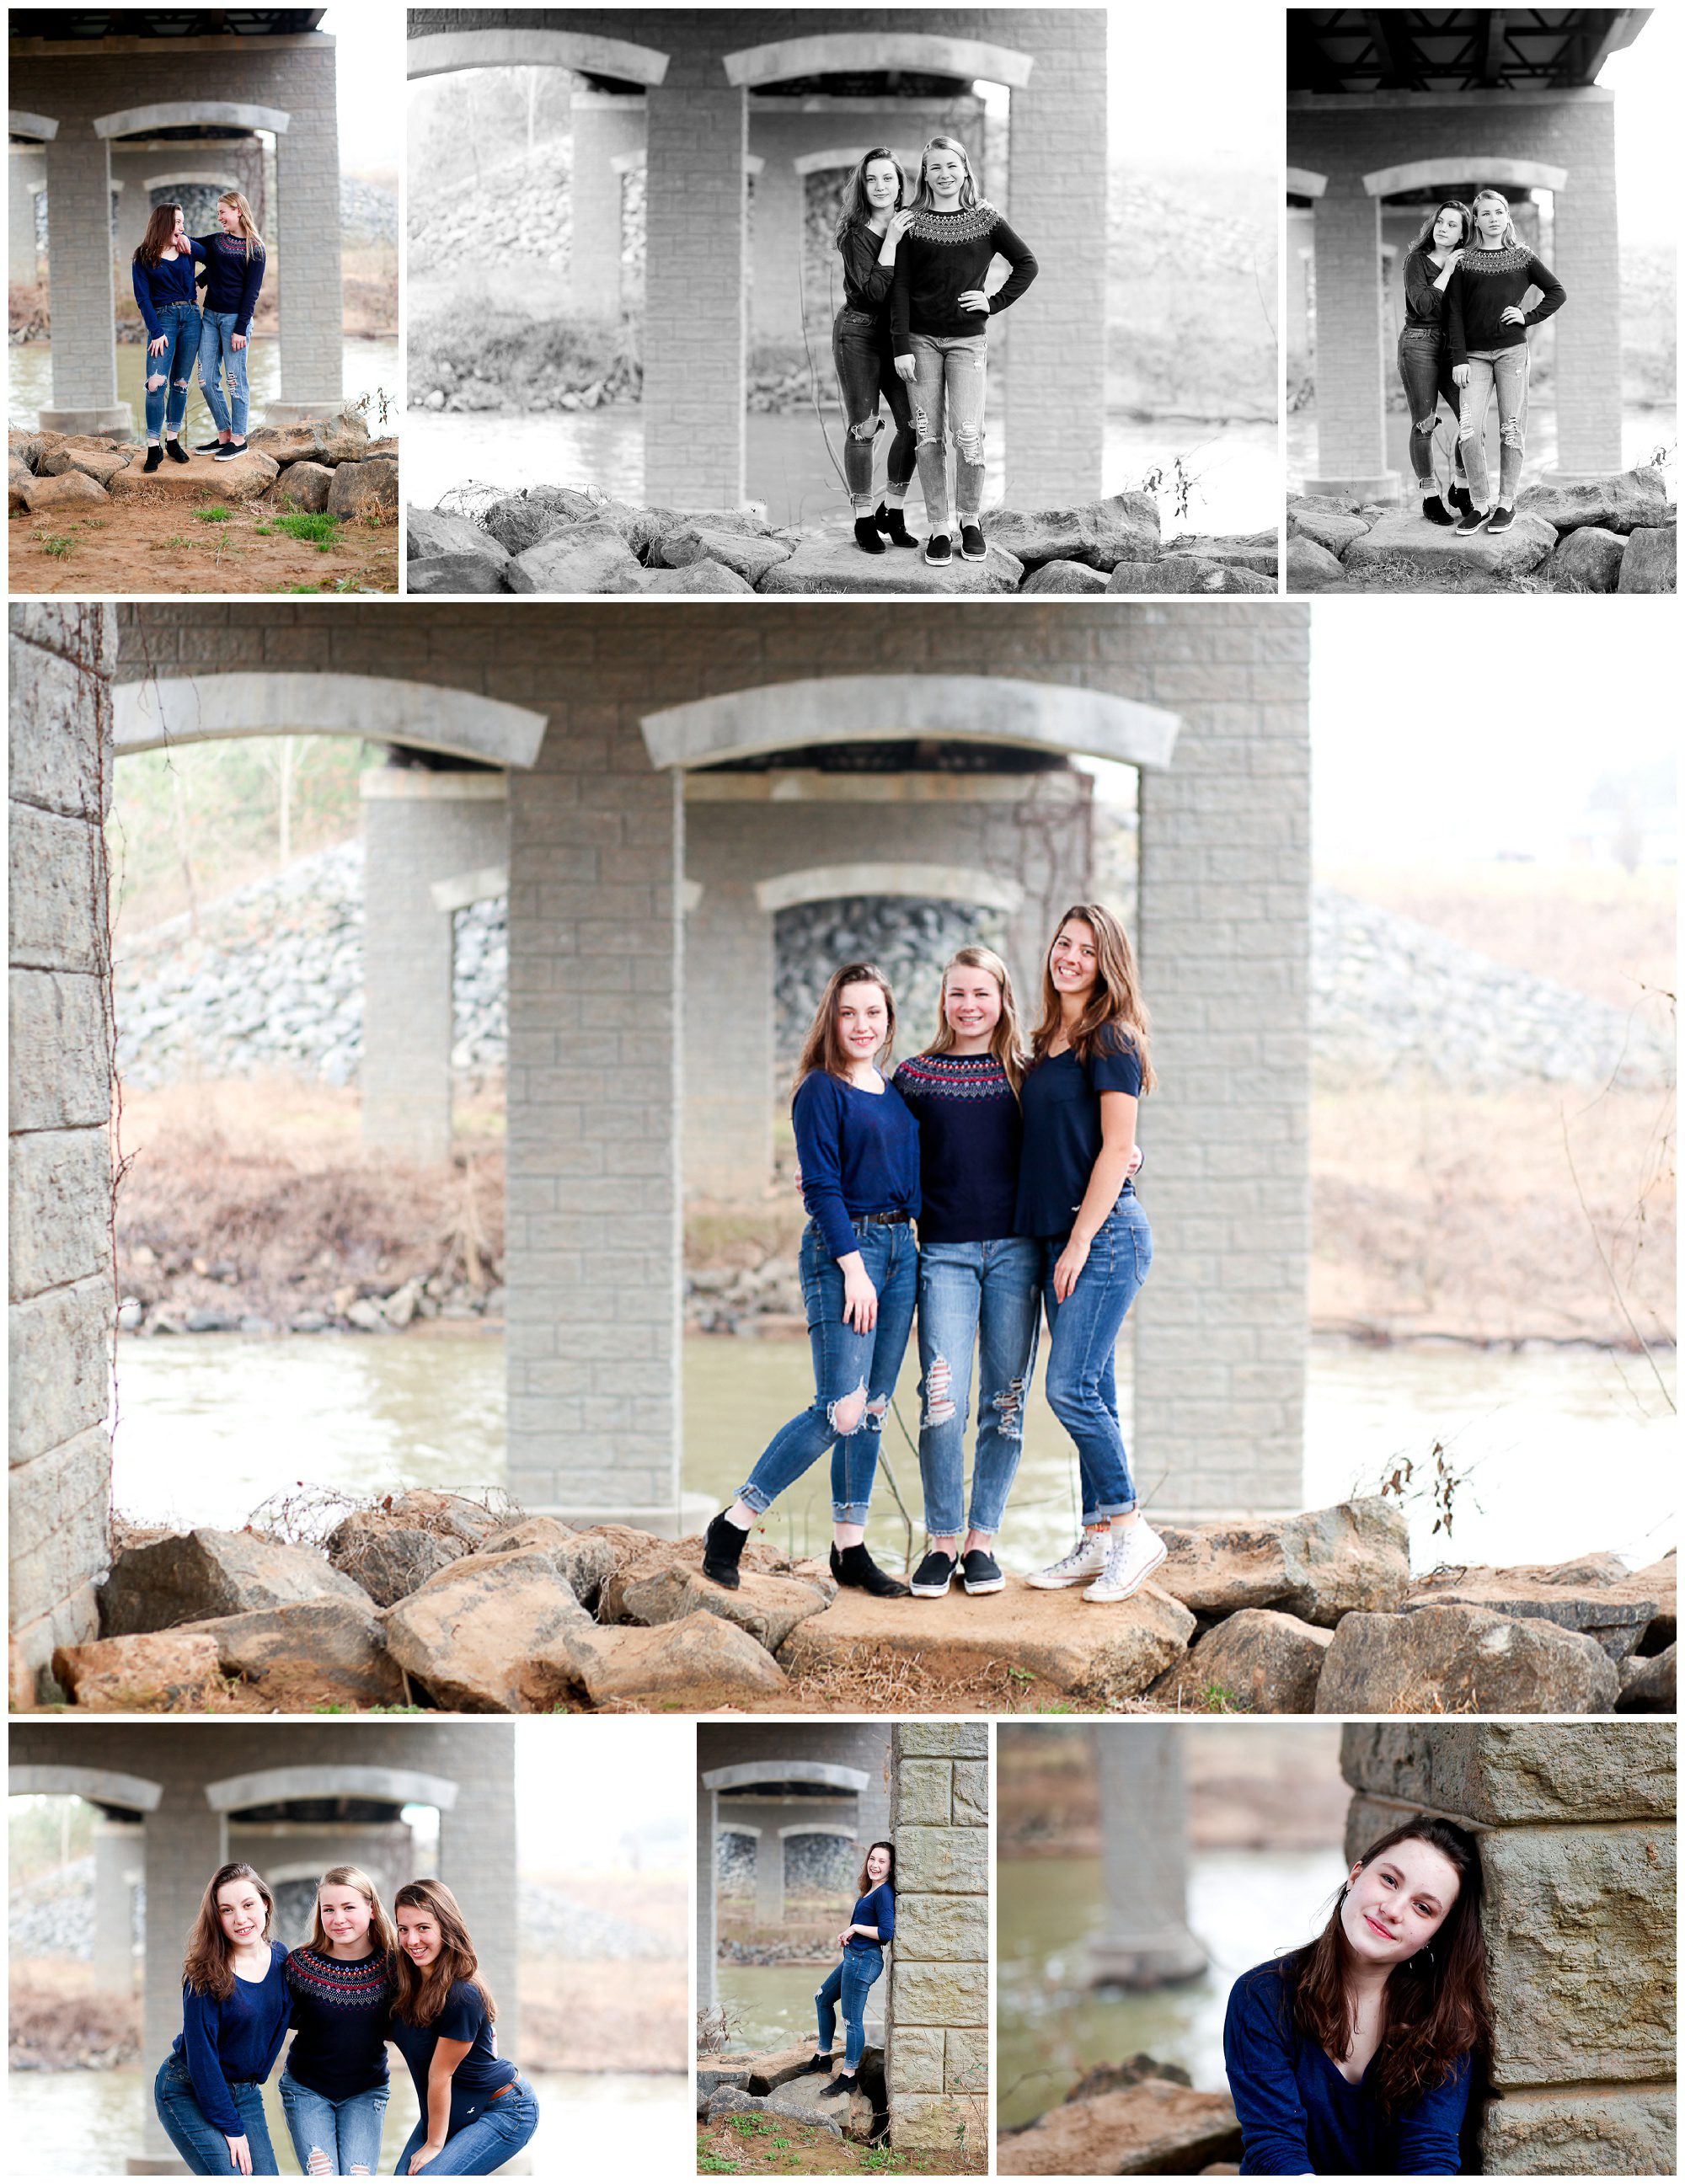 charlottesville portrait photographer cville pictures photography friends teenagers teens friendship girls fluvanna palmyra winter urban pics photoshoot